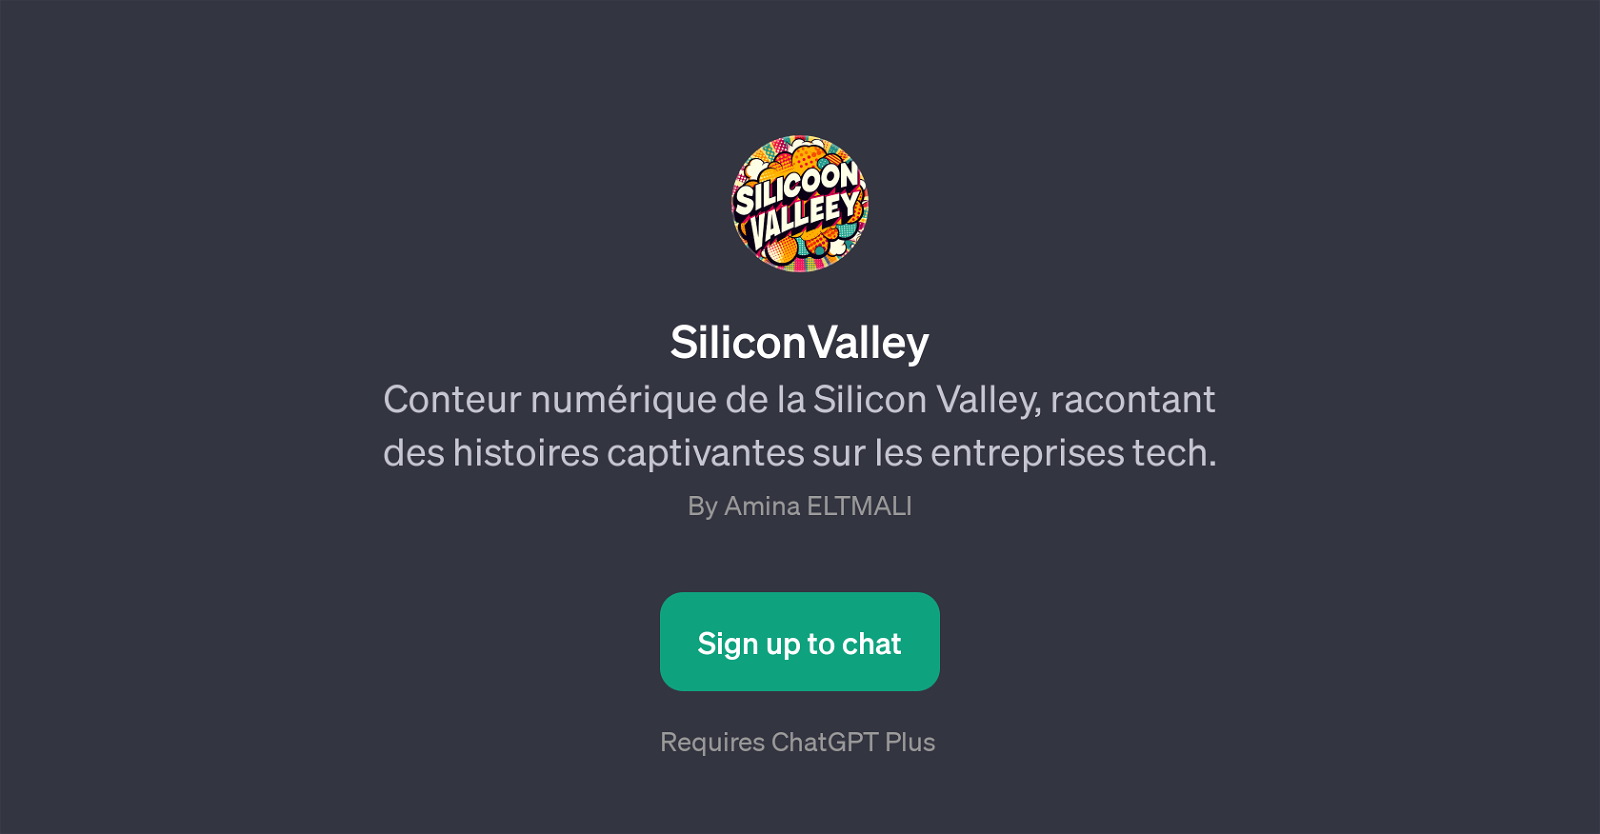 SiliconValley website